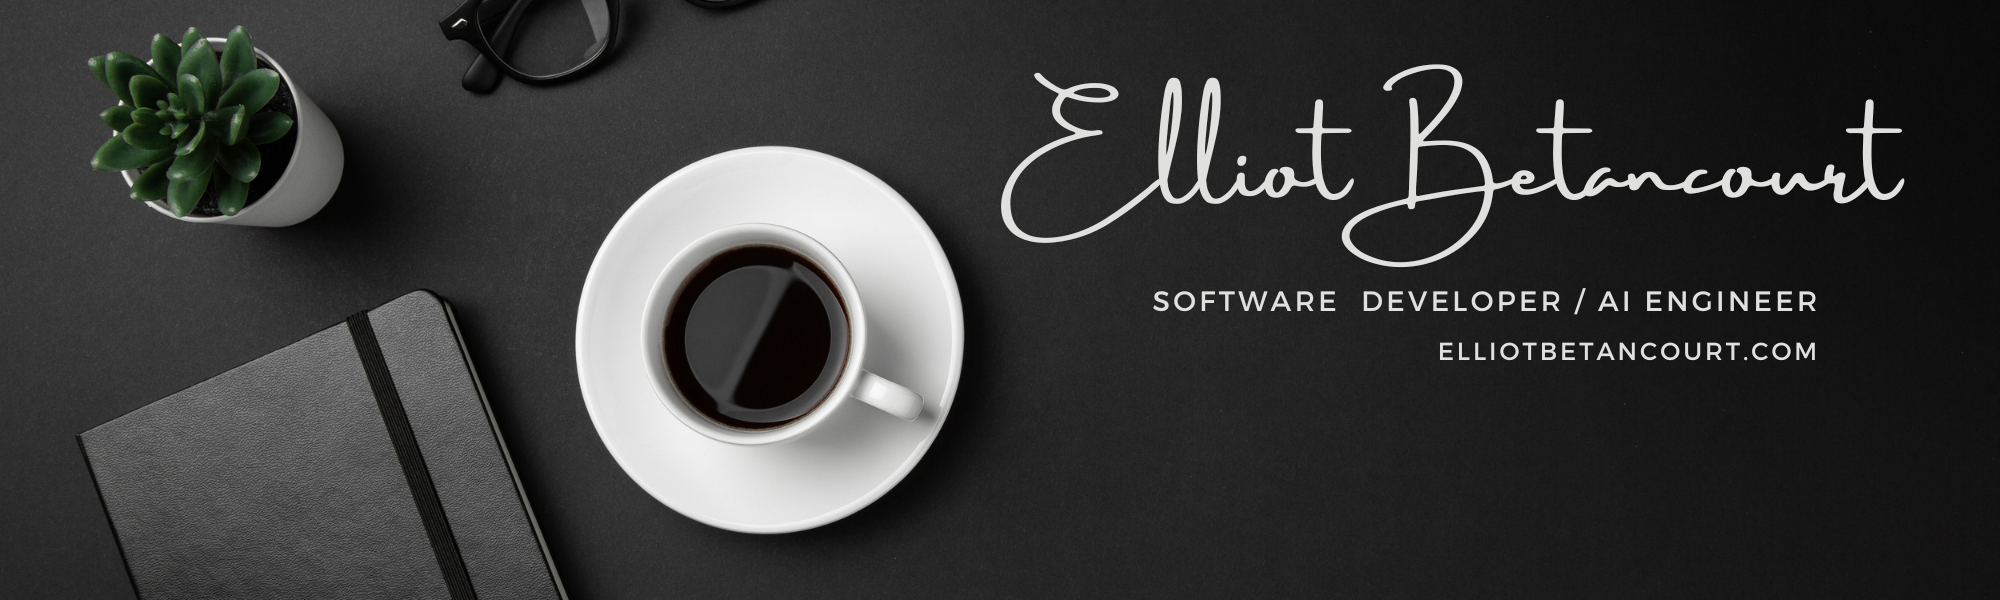 Elliot Betancourt: Software Developer and AI Engineer - elliotbetancourt.com